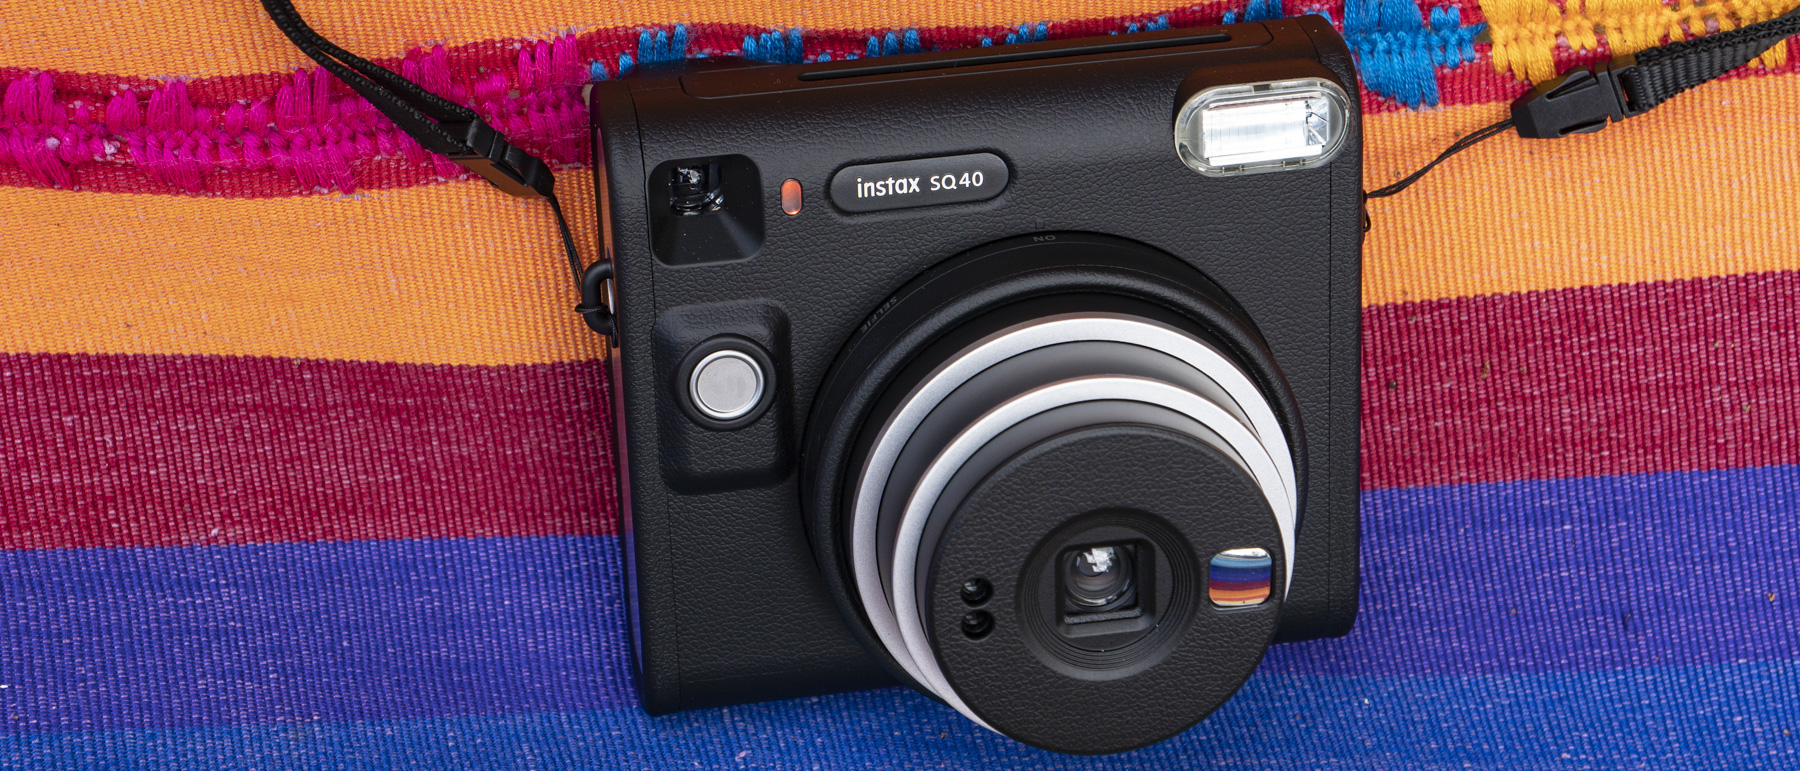 Fujifilm Instax Square SQ40 Instant Film Camera (Black)